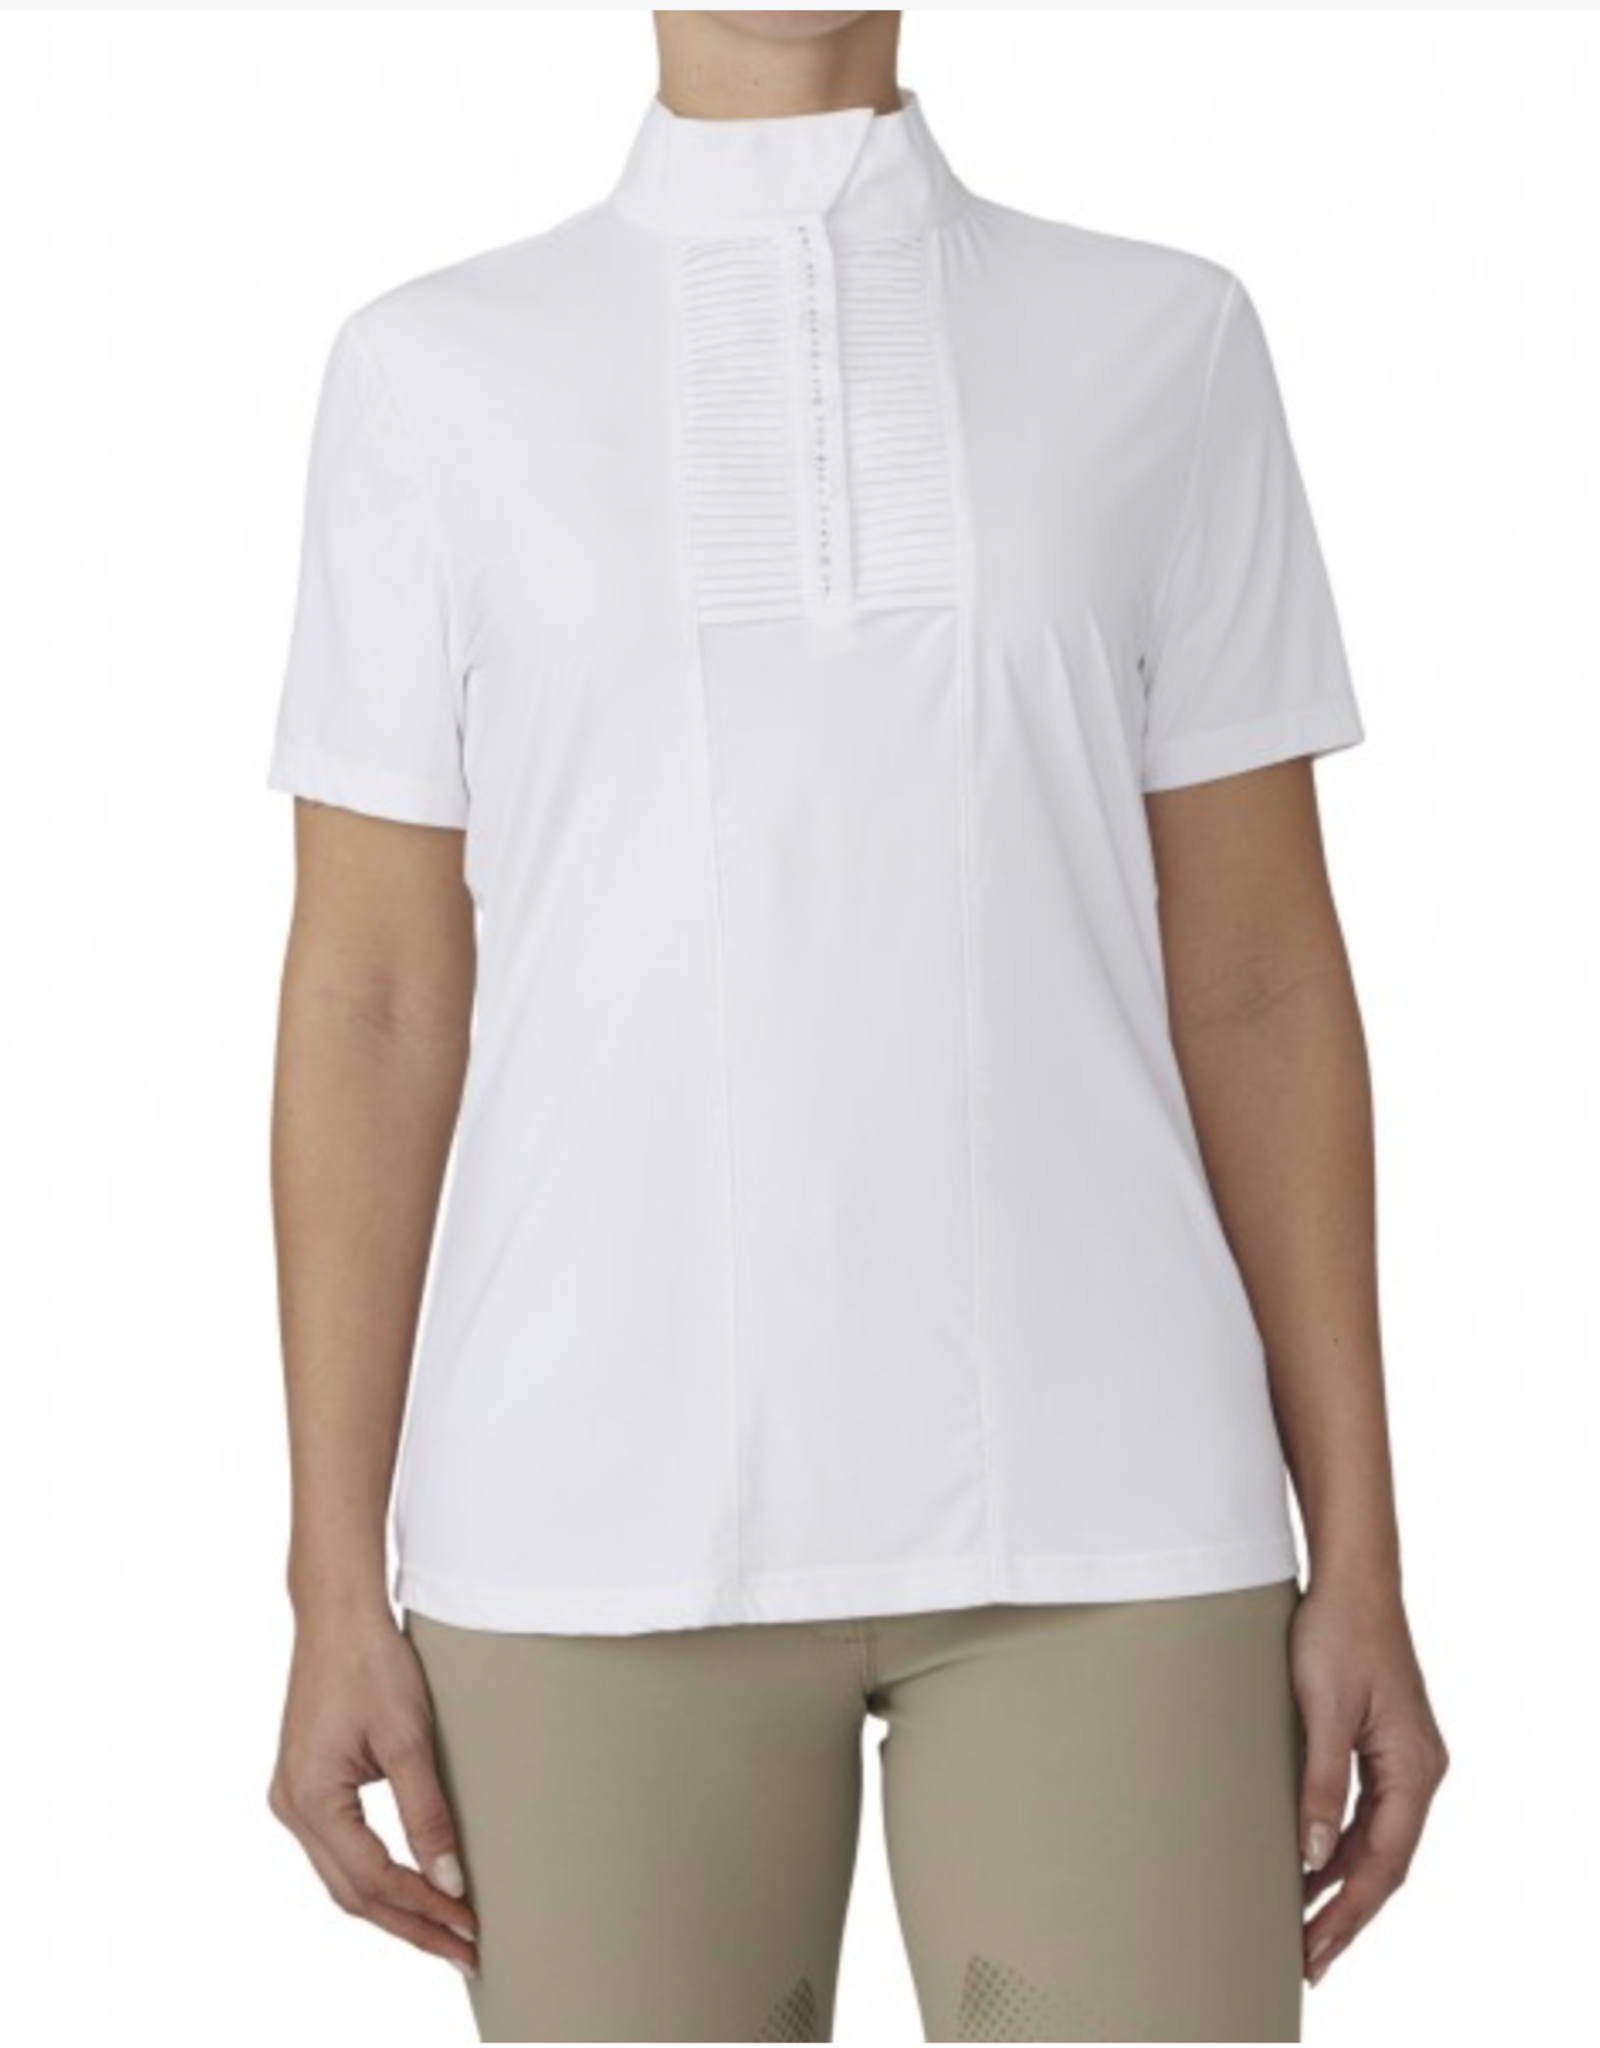 Ovation Ladies' Elegance Grace Short Sleeve Shirt